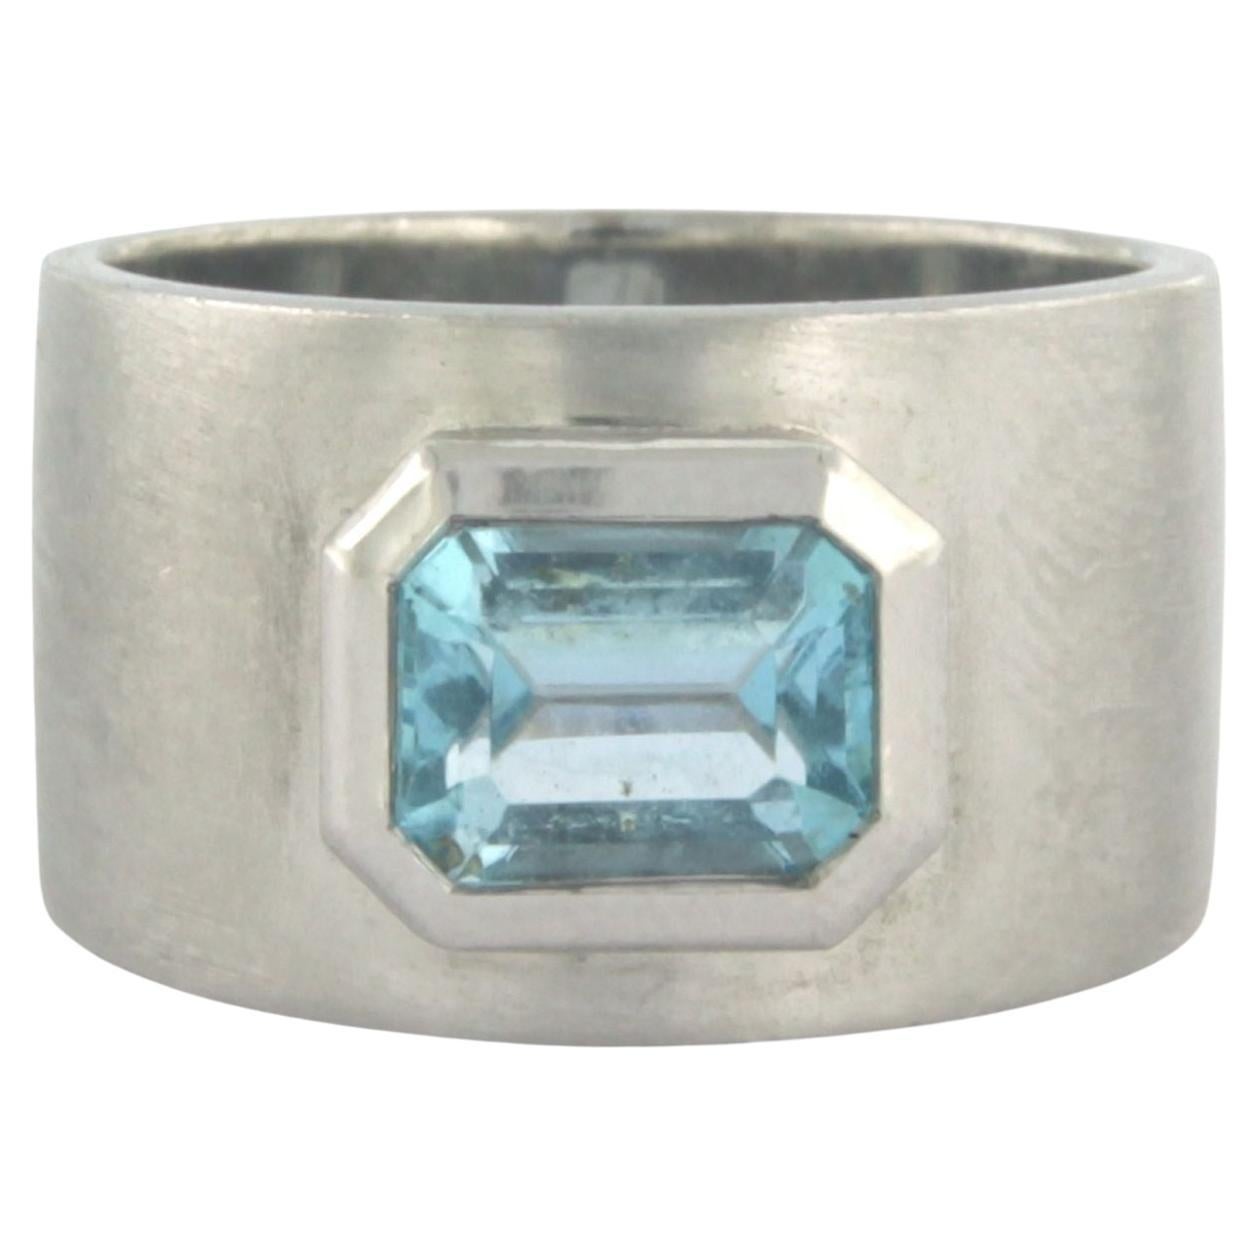 18k white gold ring with aquamarine up to 1.05 ct